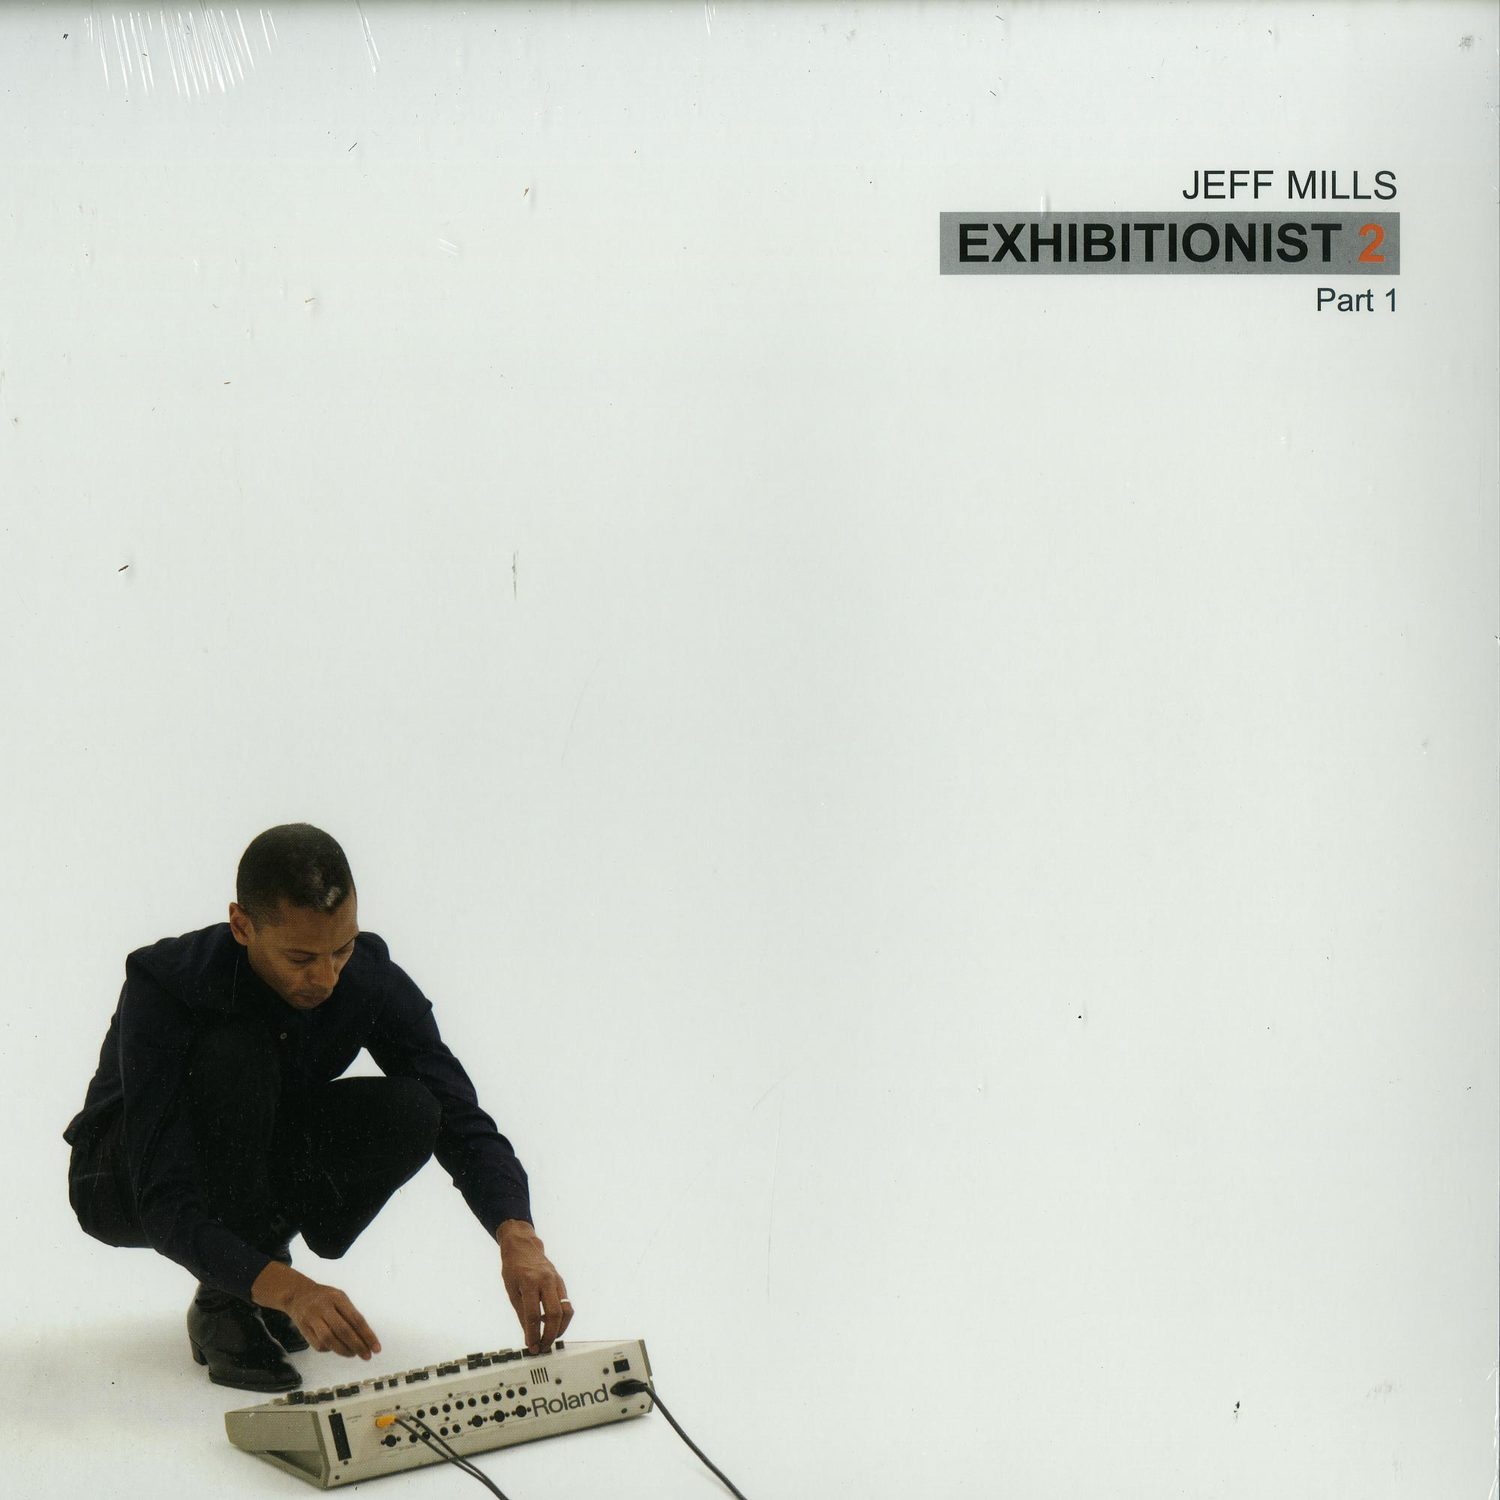 Jeff Mills - EXHIBITIONIST 2 